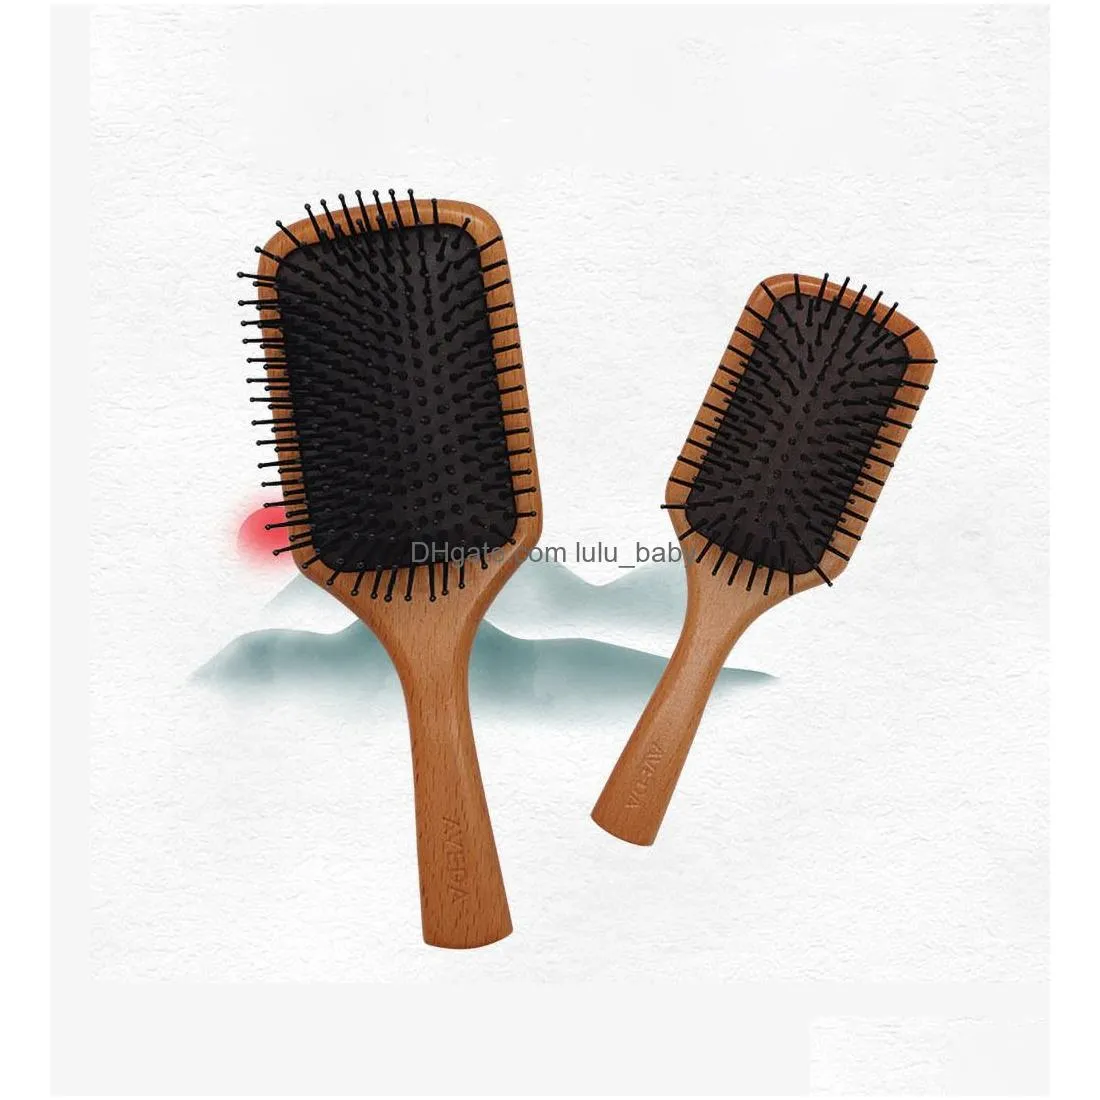 aveda paddle brush brosse club massage hairbrush combs prevent trichomadesis hair sac massager wood tpe airbag nylon teeth